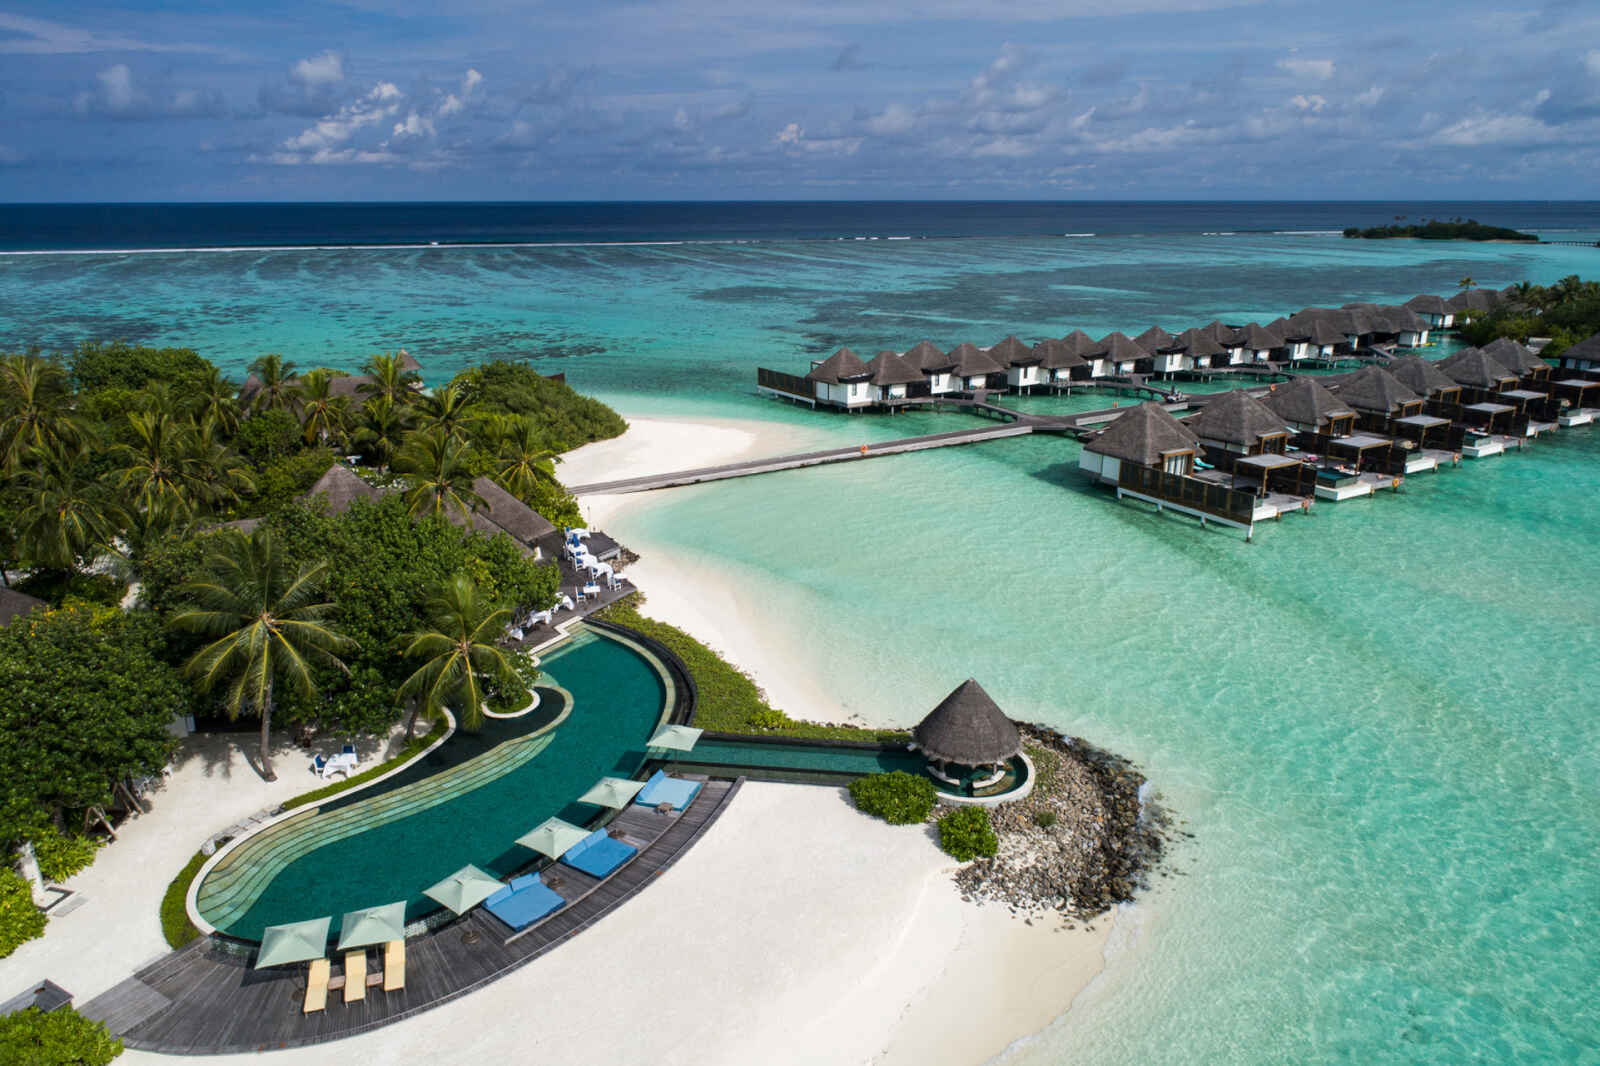 Maldives - Hotel Four Seasons Kuda Huraa 5*